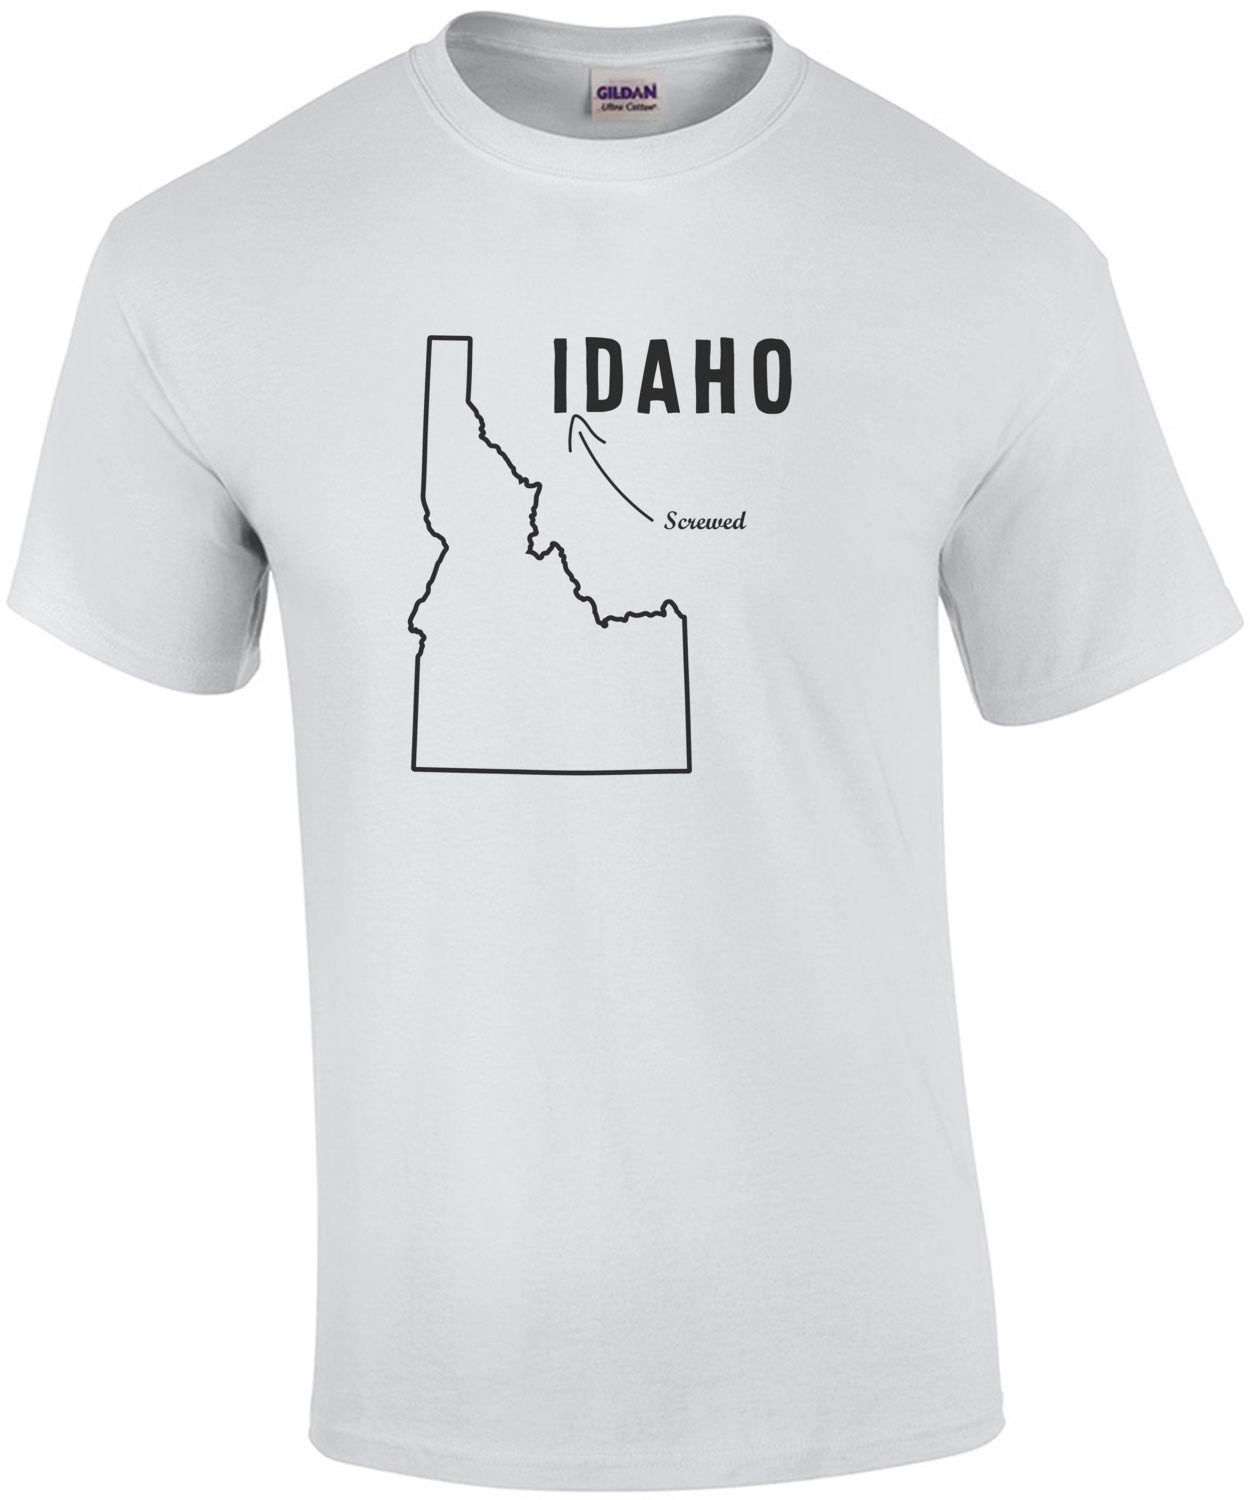 I Screwed Daho - Idaho T-Shirt